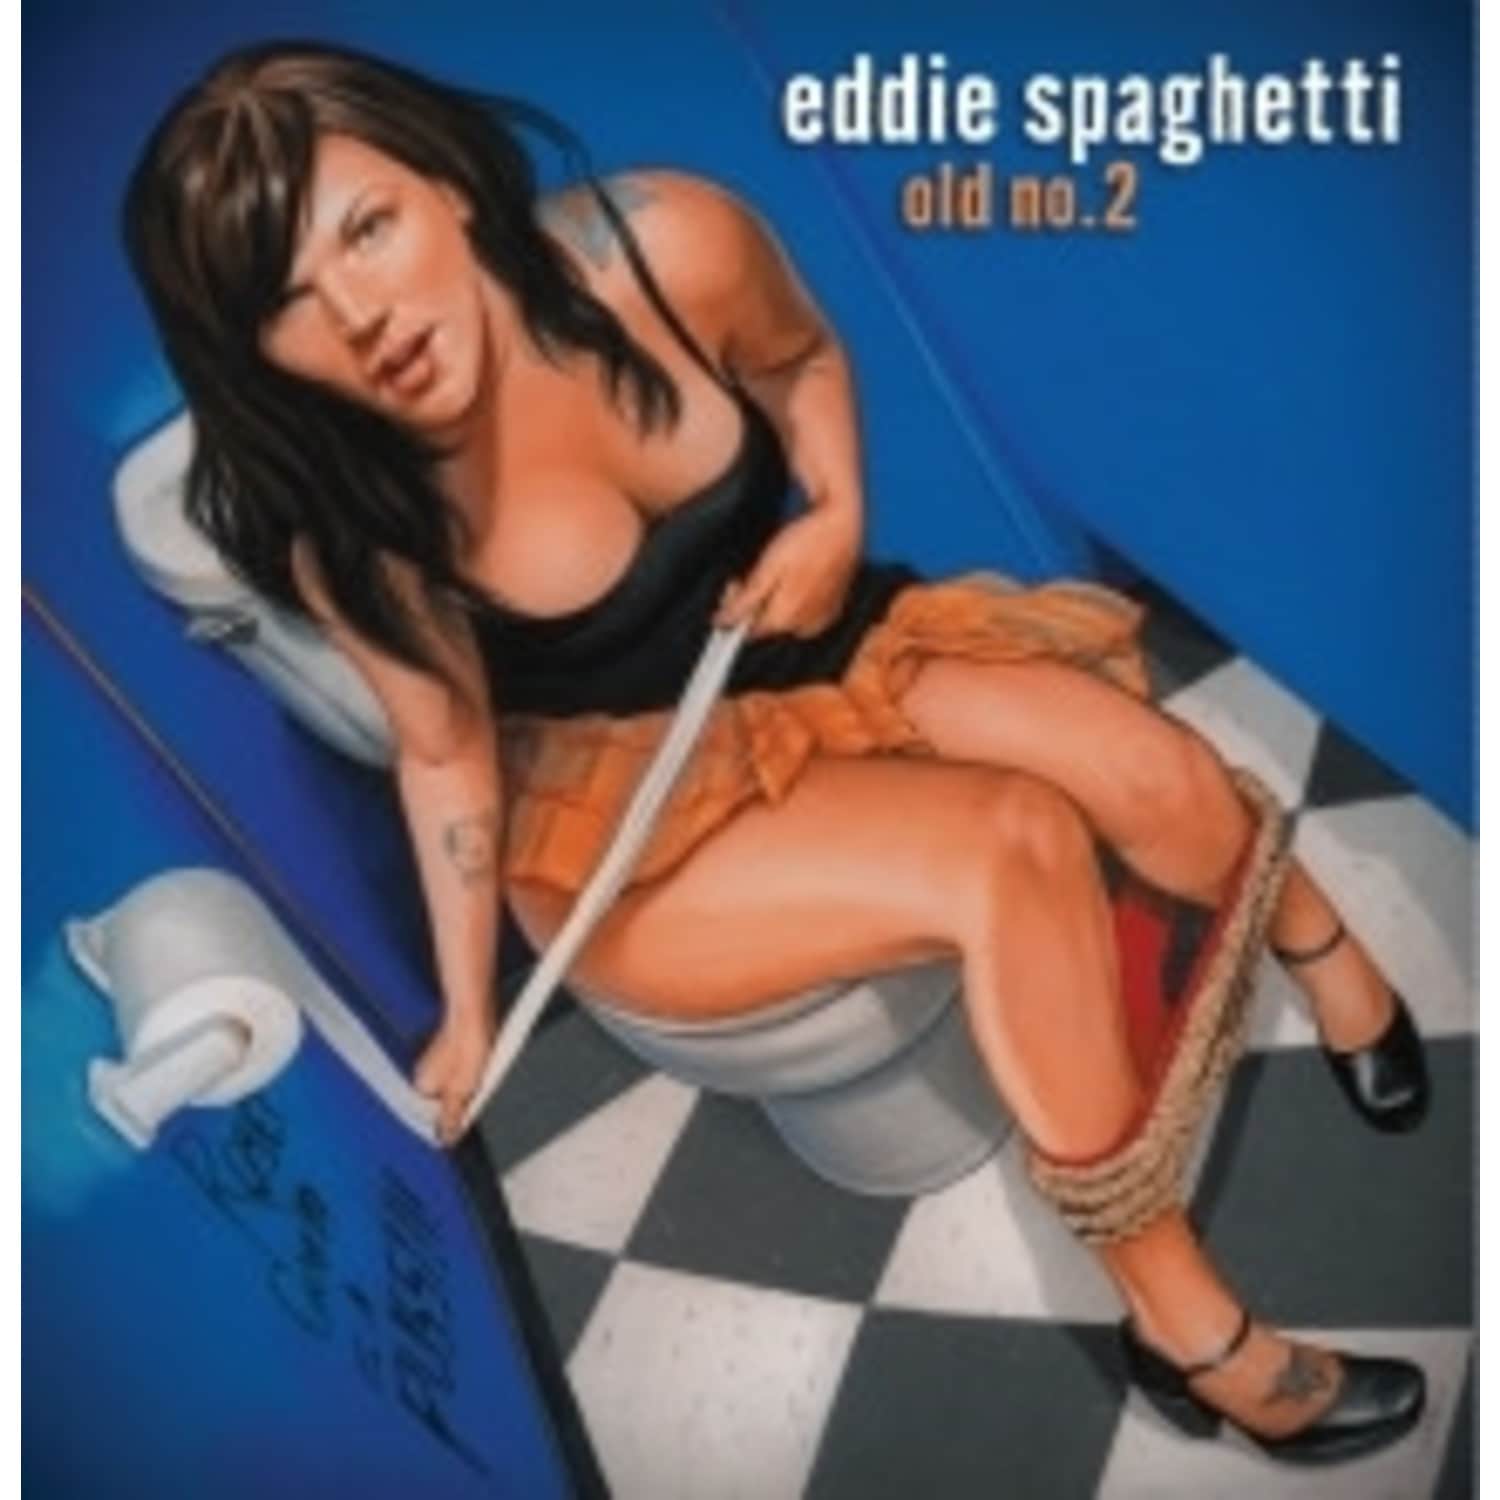 Eddie Spaghetti - OLD NO.2 